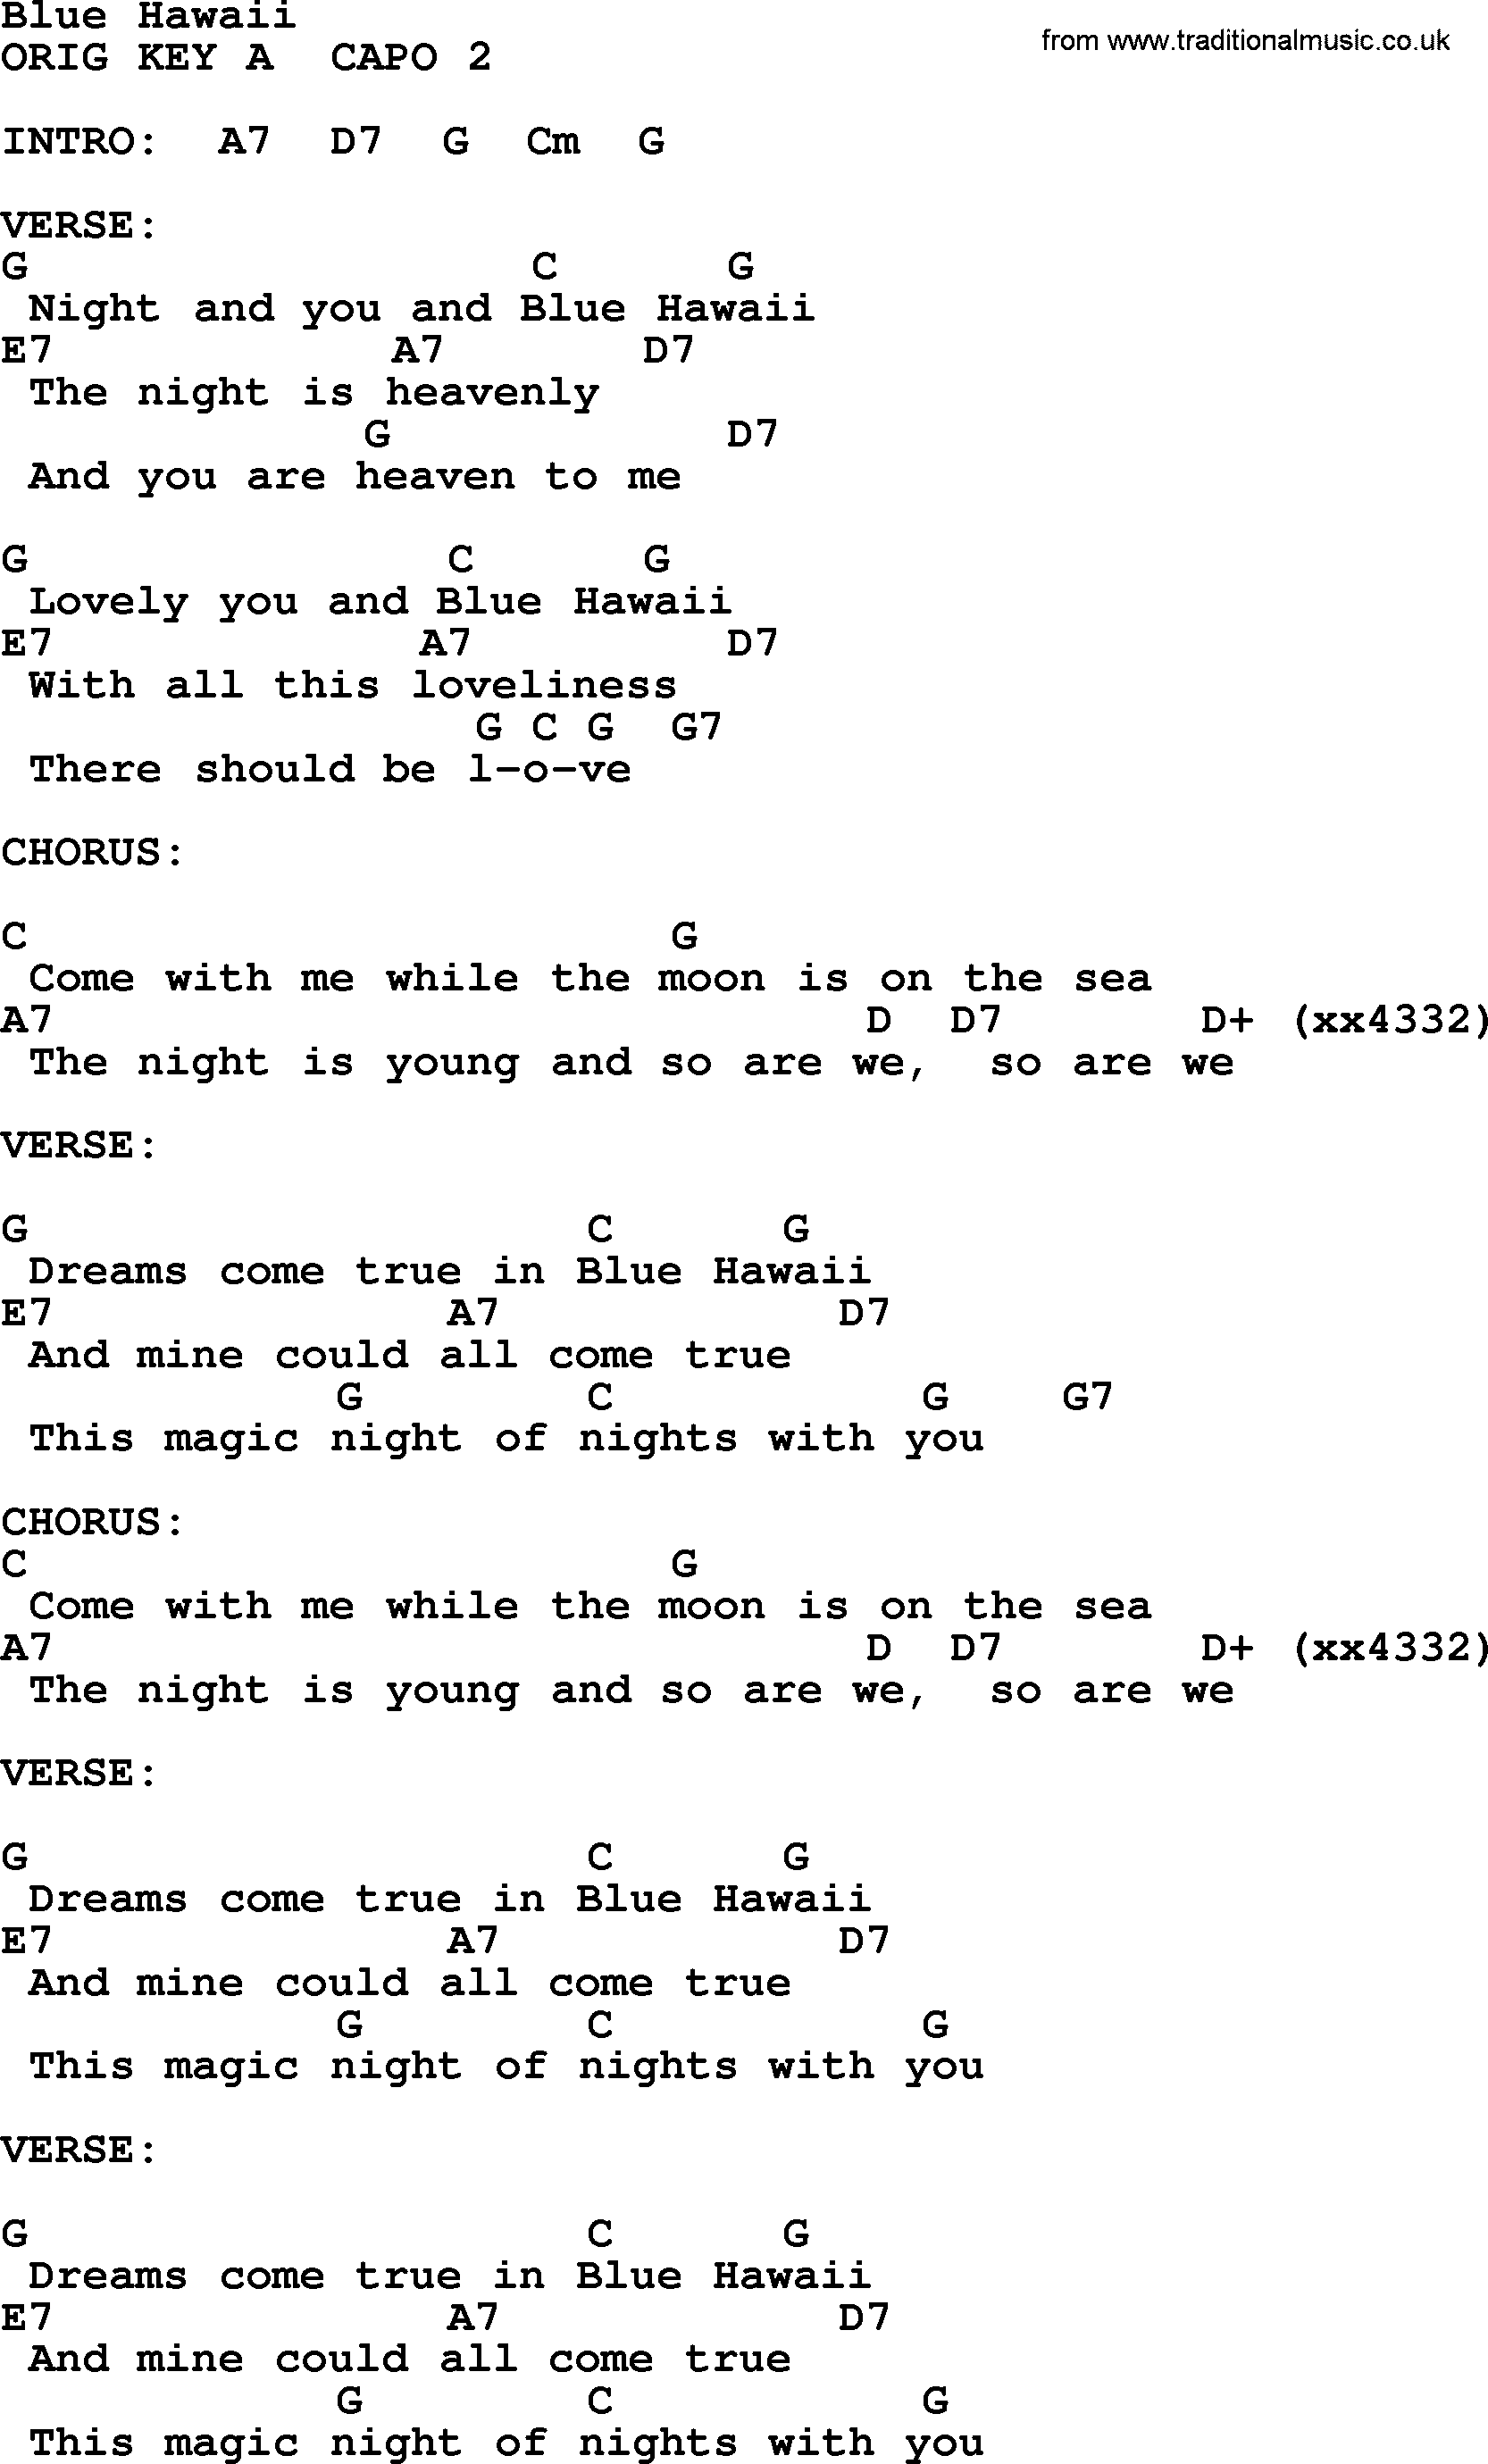 Elvis Presley song: Blue Hawaii, lyrics and chords